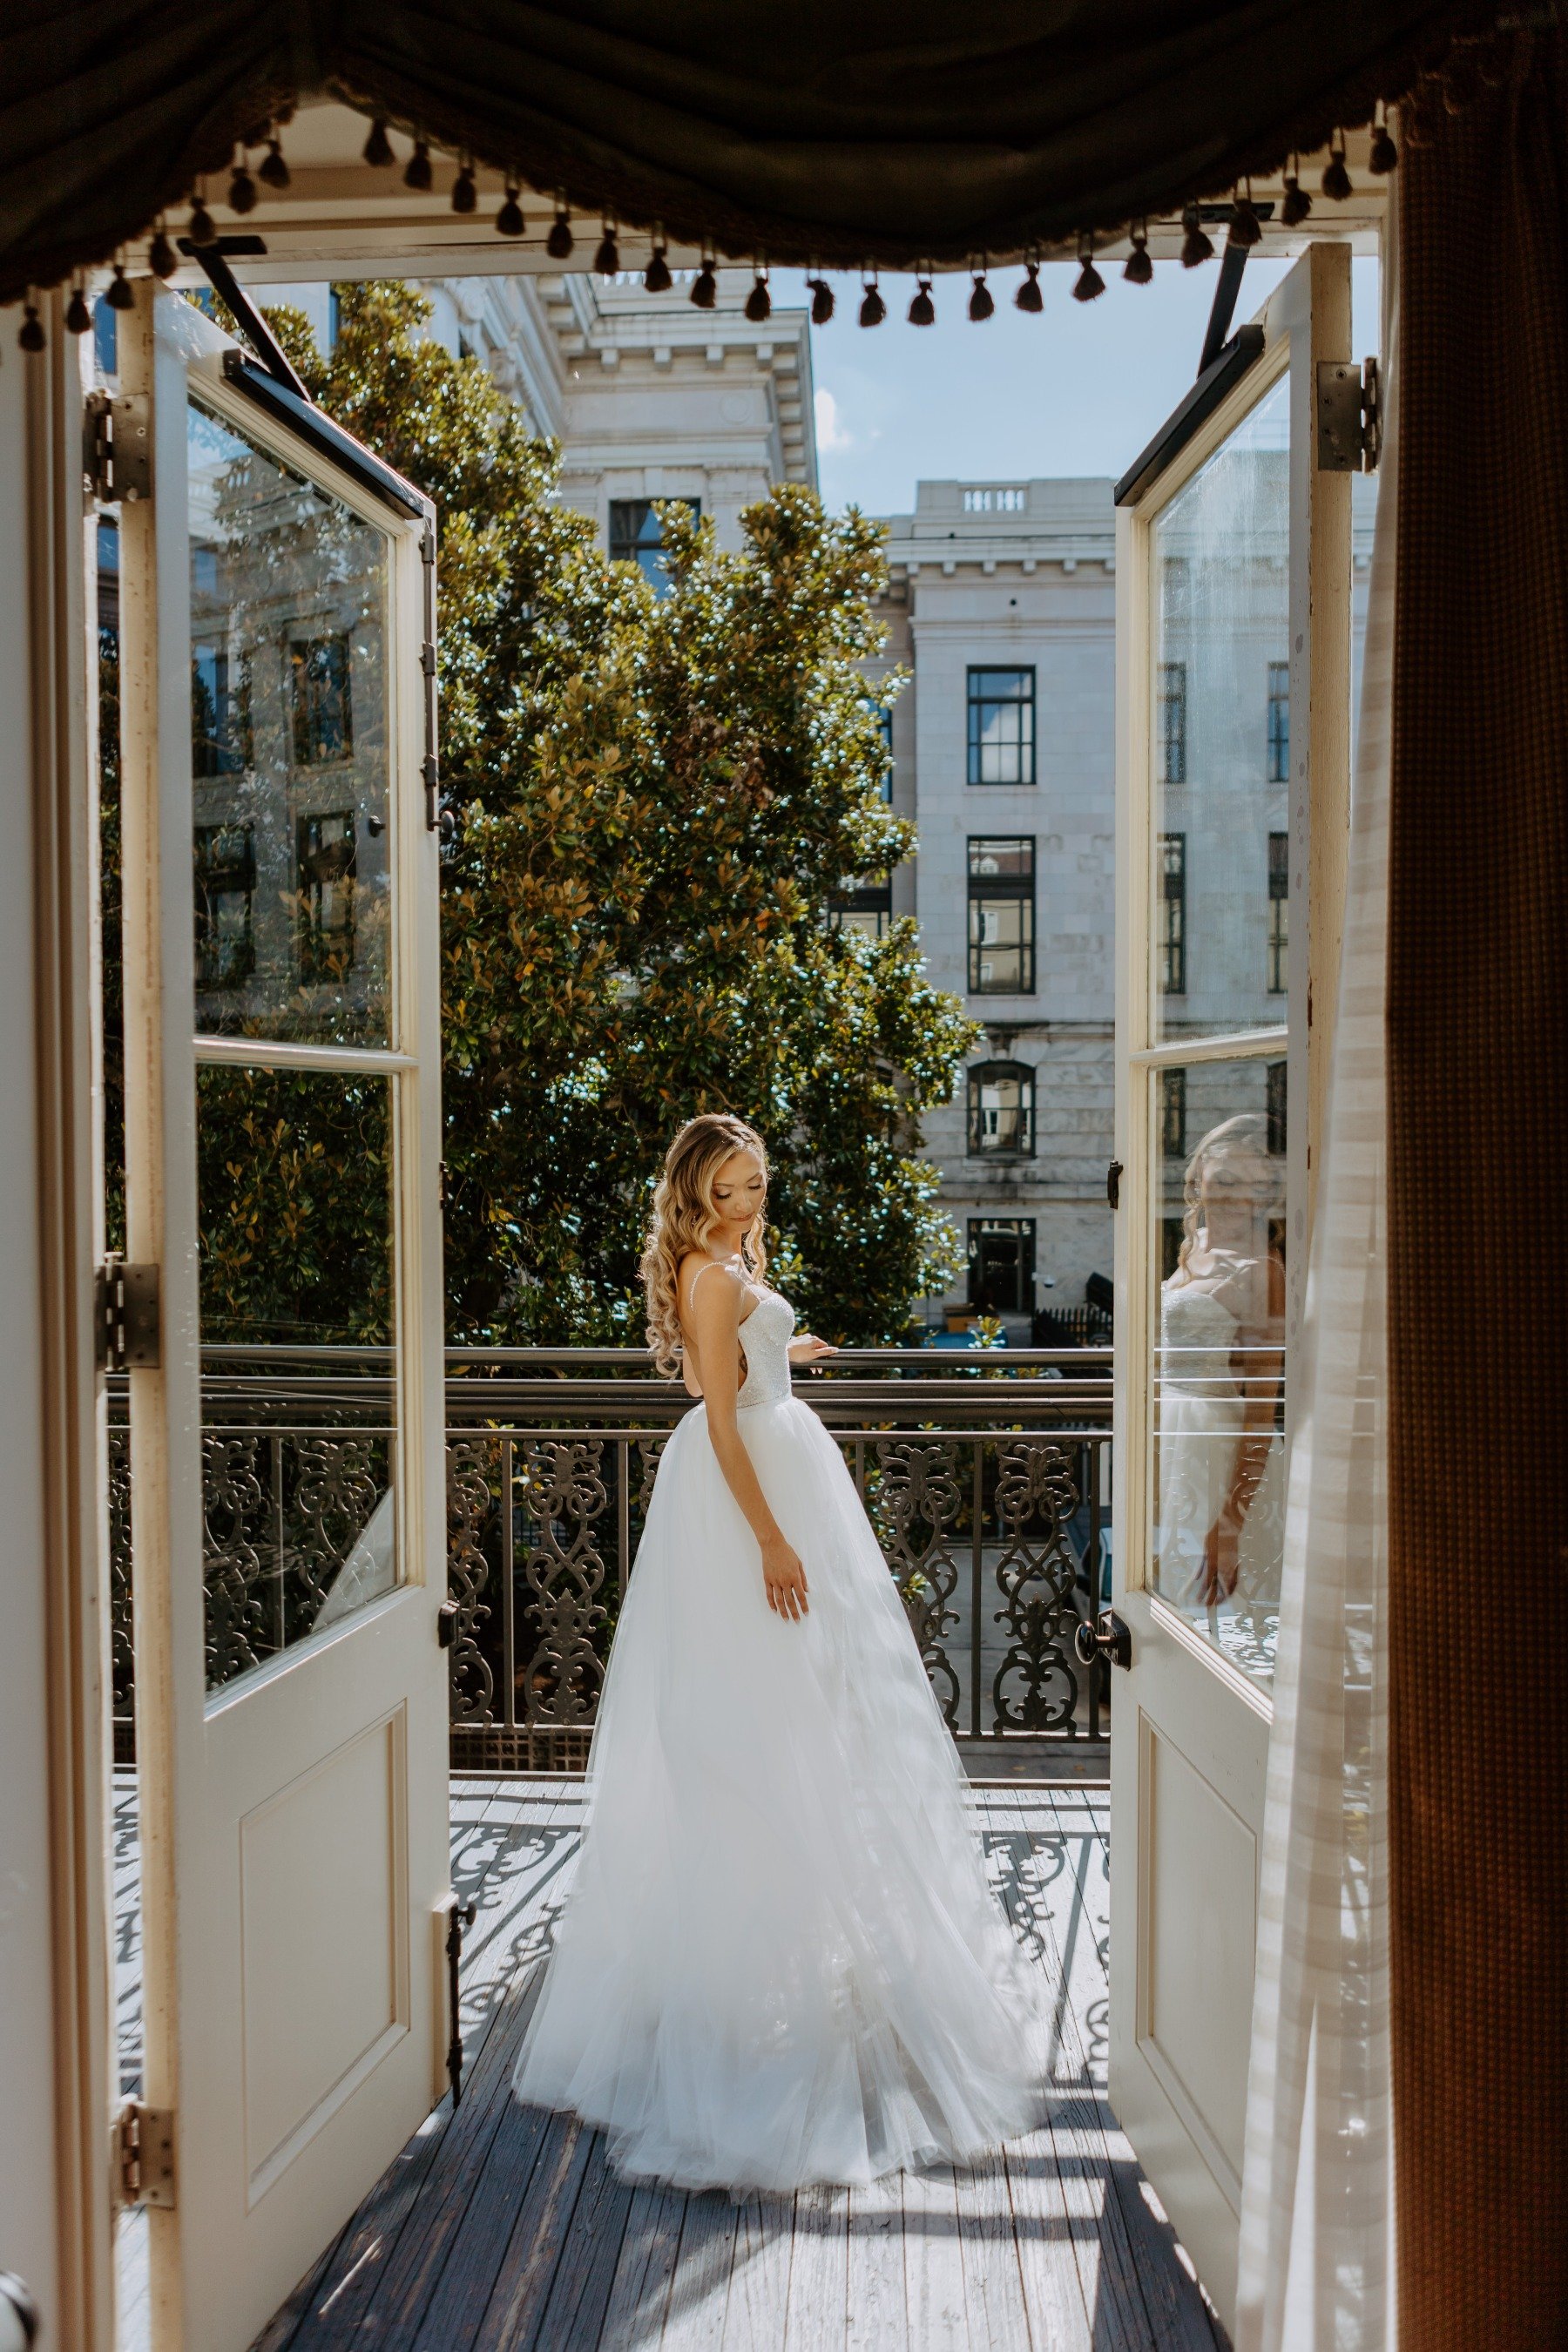 Our dreamy gorgeous bride Justina 👰 from Orissa@lorean_bridal_studio |  Instagram